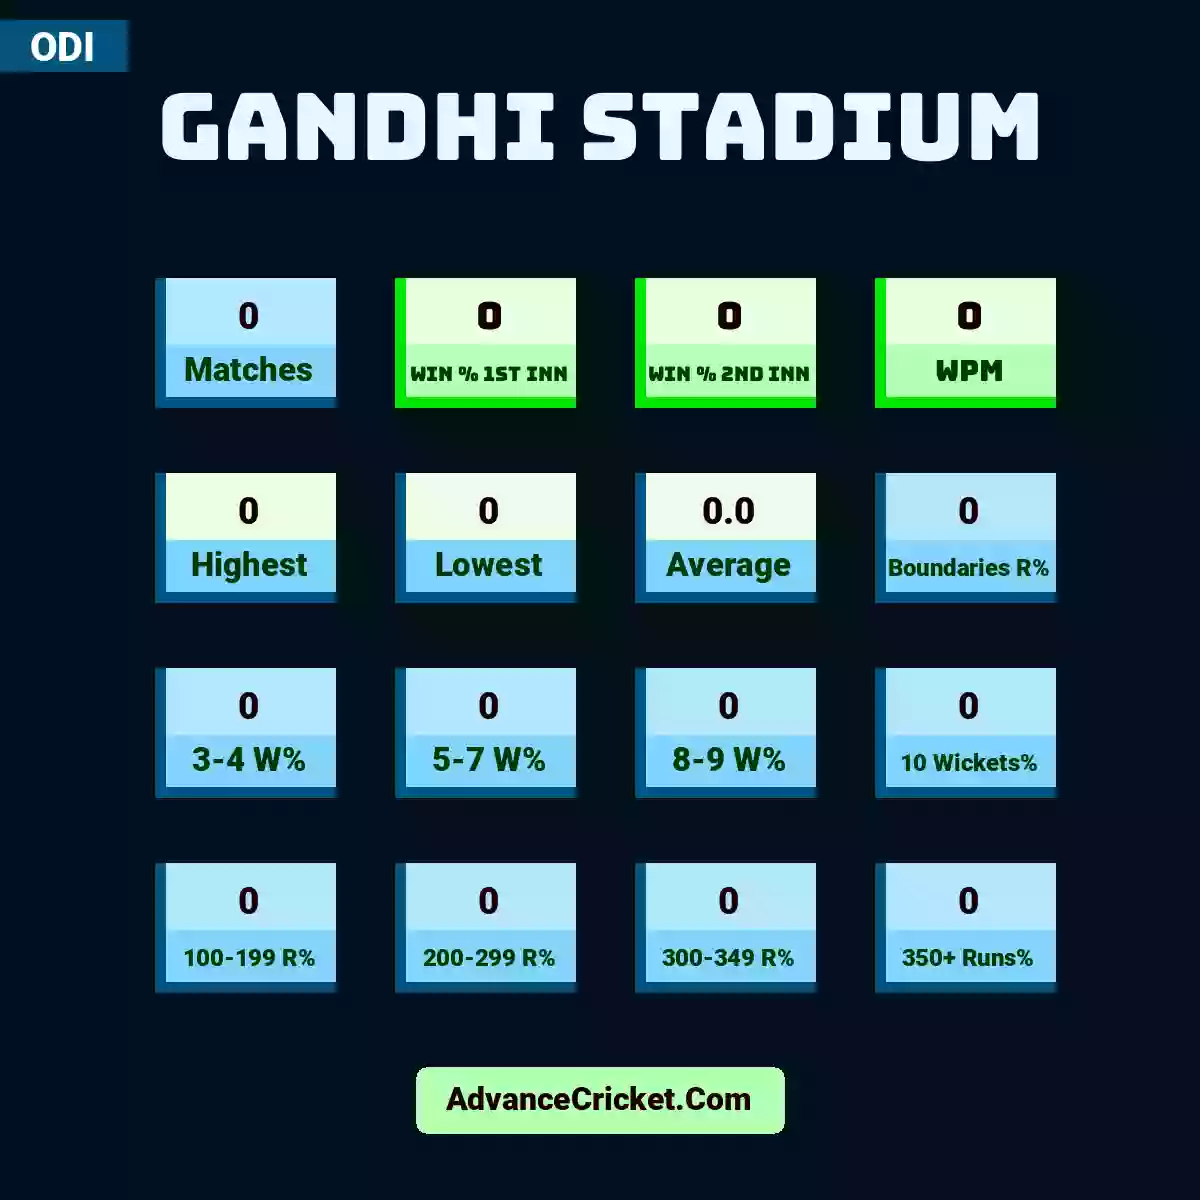 Image showing Gandhi Stadium with Matches: 0, Win % 1st Inn: 0, Win % 2nd Inn: 0, WPM: 0, Highest: 0, Lowest: 0, Average: 0.0, Boundaries R%: 0, 3-4 W%: 0, 5-7 W%: 0, 8-9 W%: 0, 10 Wickets%: 0, 100-199 R%: 0, 200-299 R%: 0, 300-349 R%: 0, 350+ Runs%: 0.